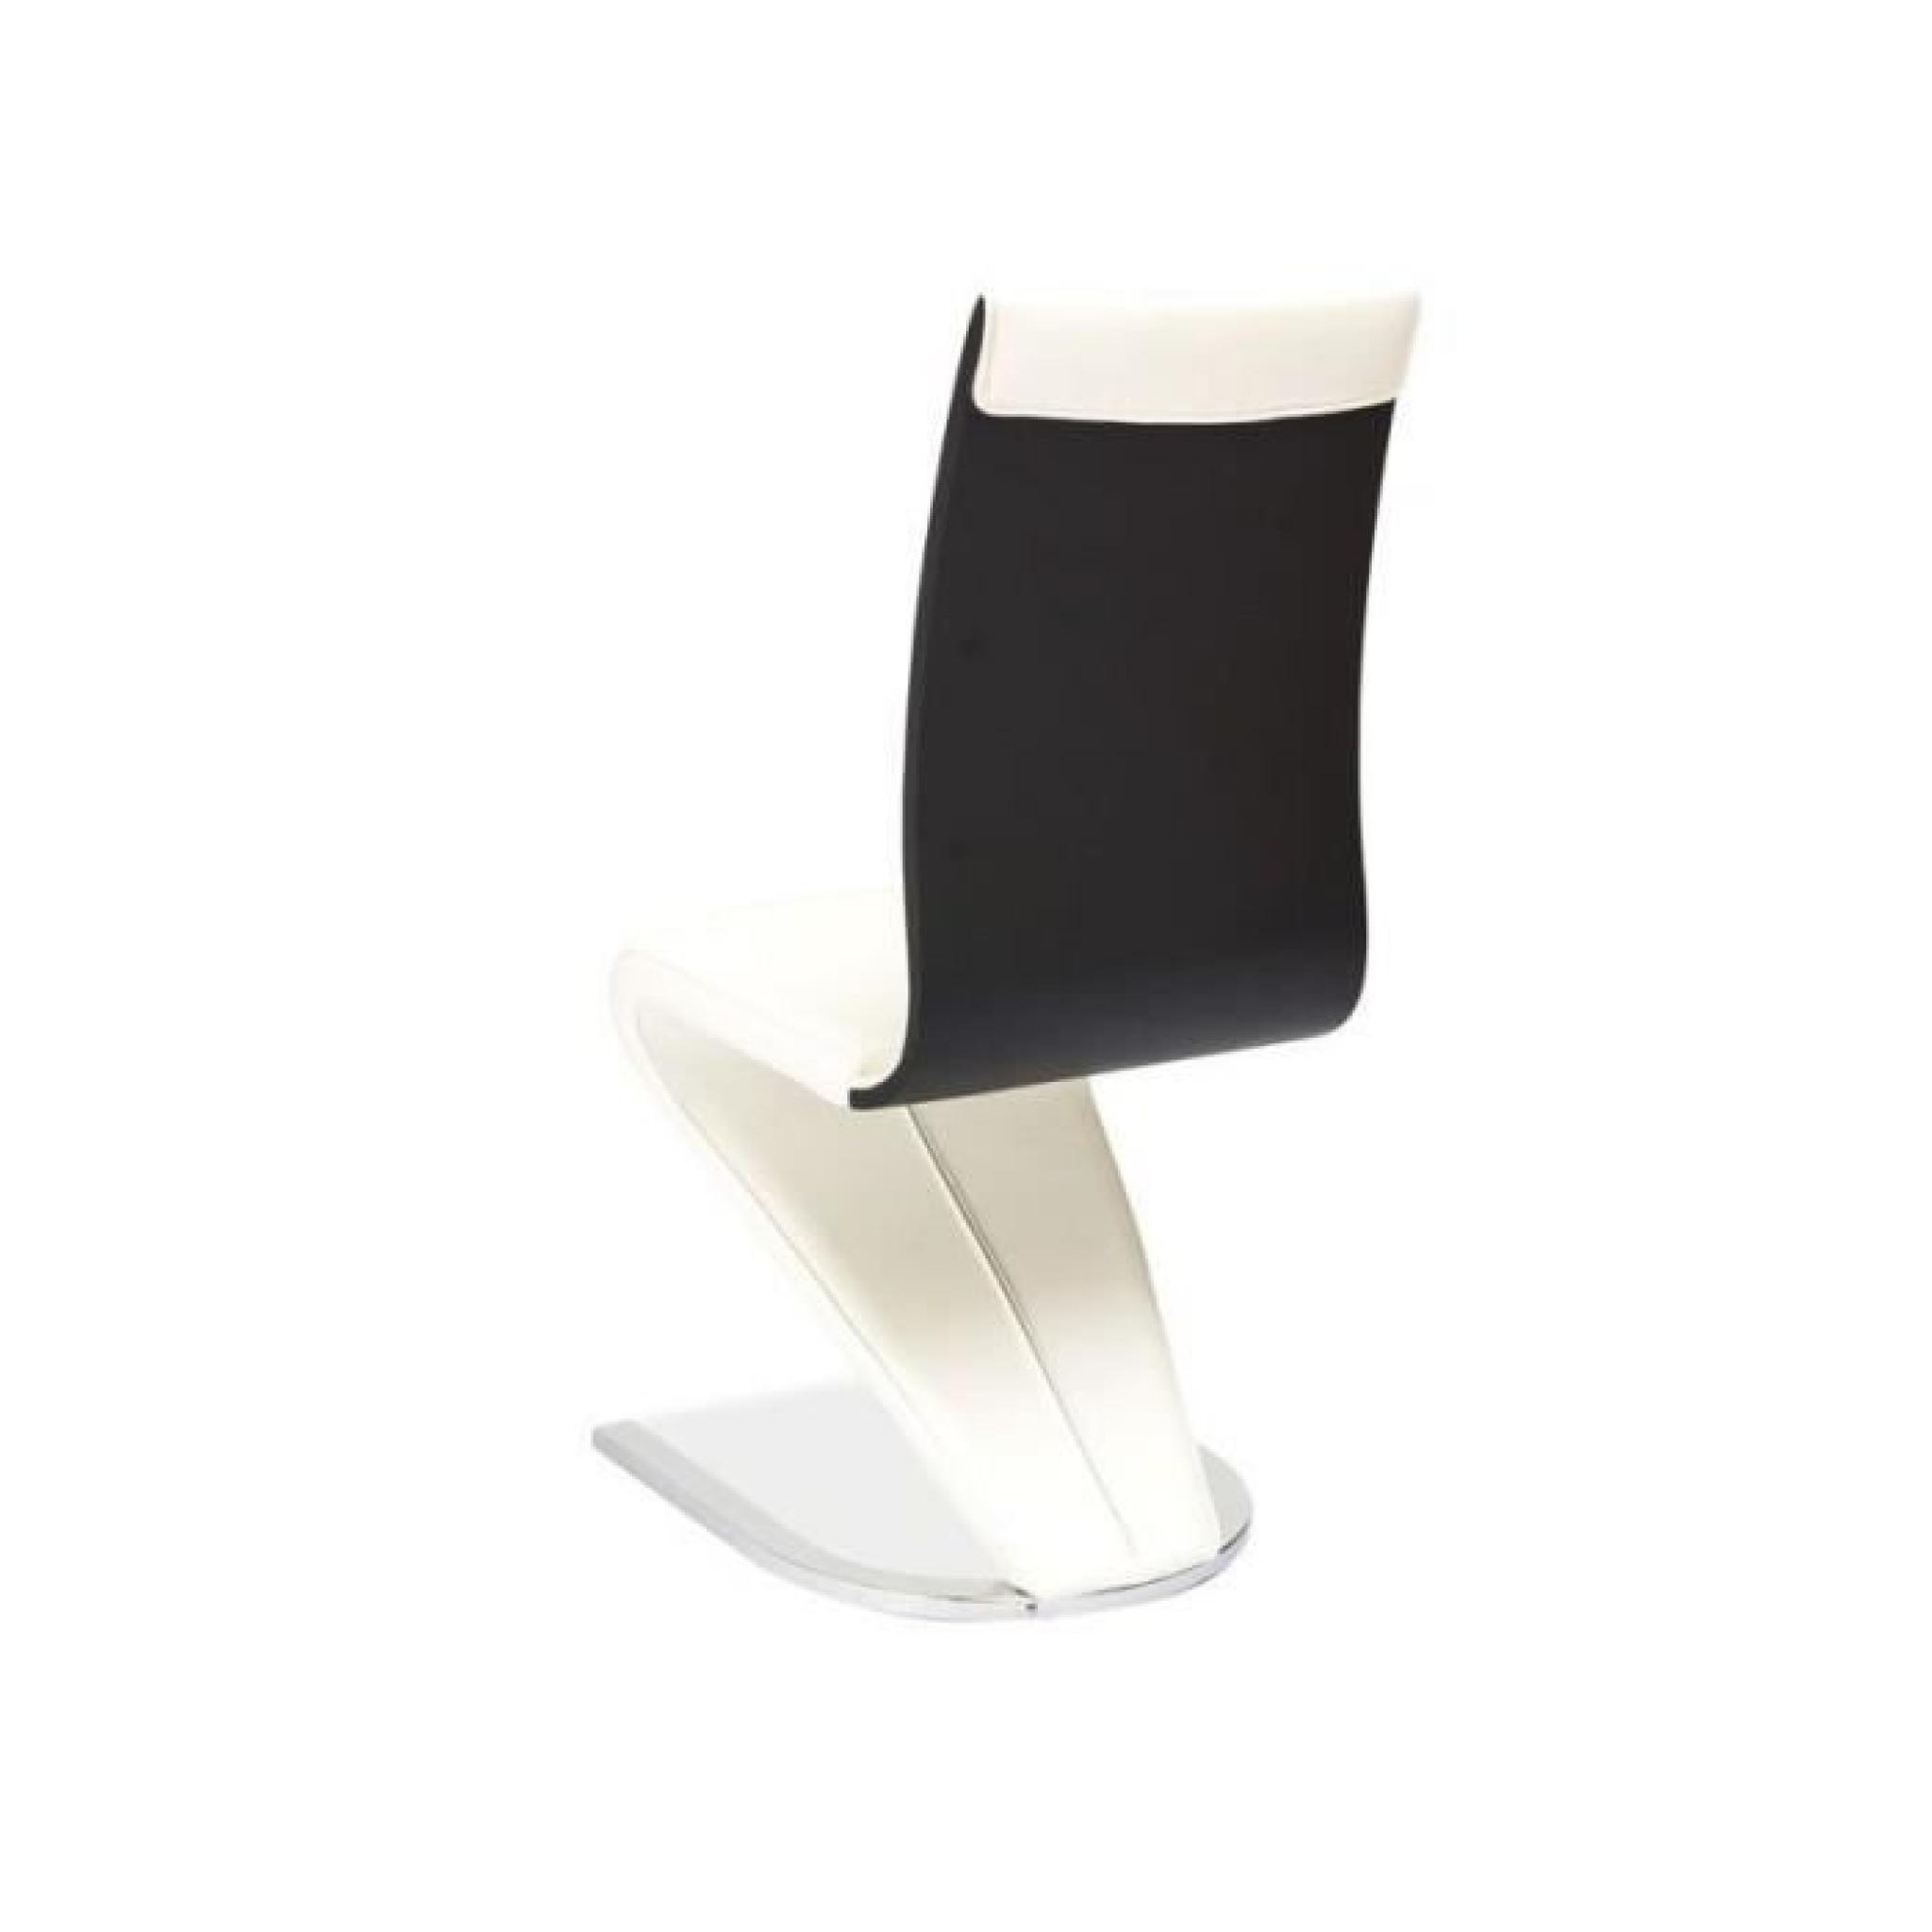 JUSThome H-134 Chaise Blanc / Noir 99 x 44 x 46 pas cher